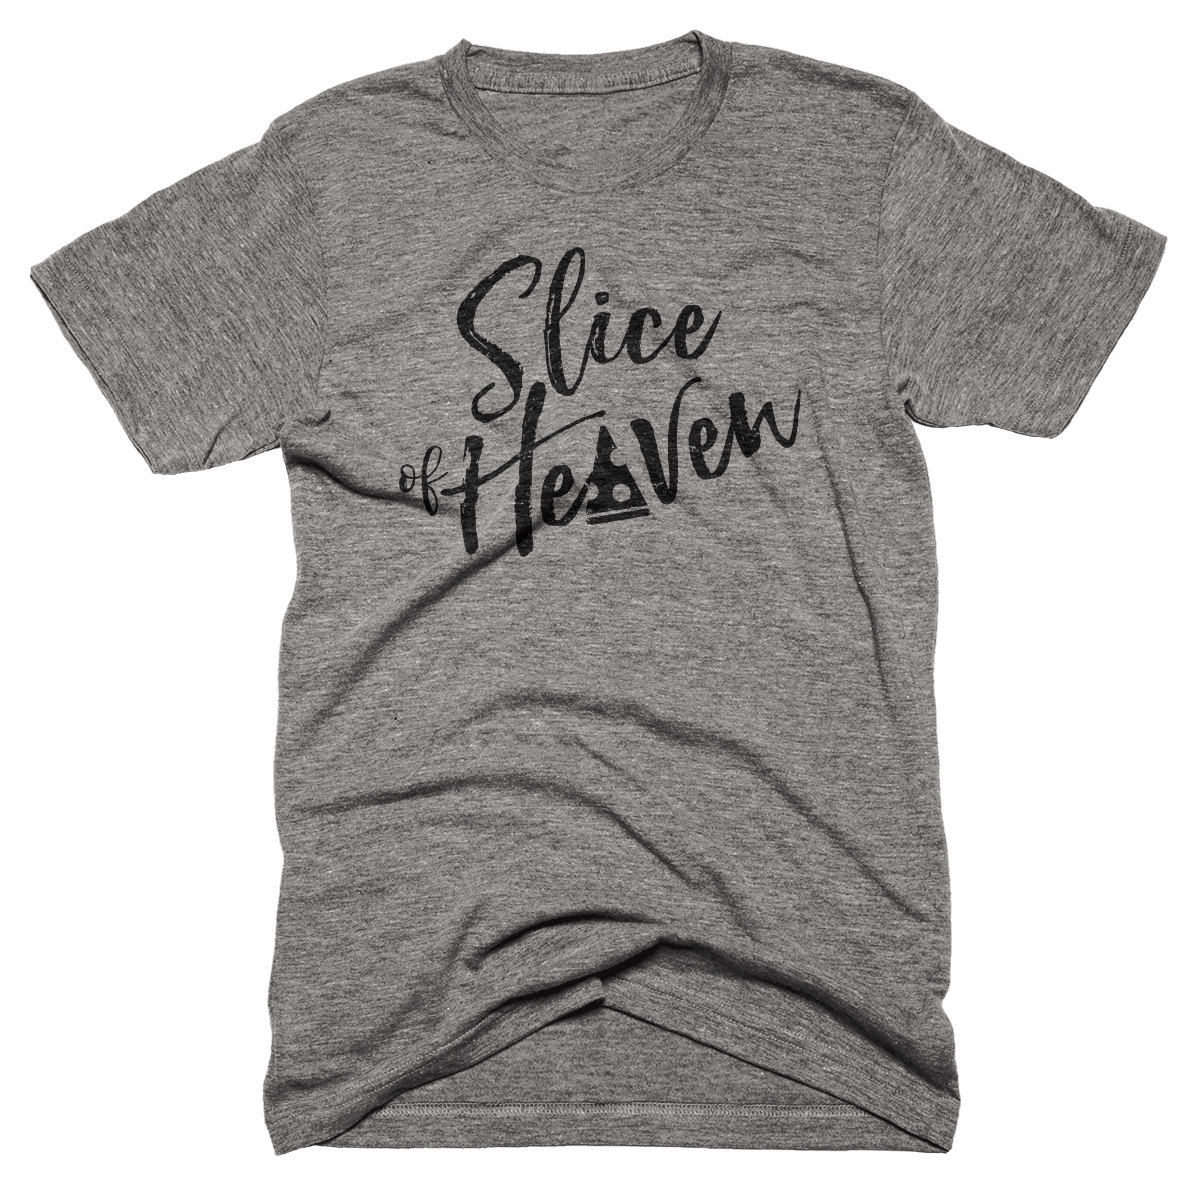 Slice of Heaven T-Shirt